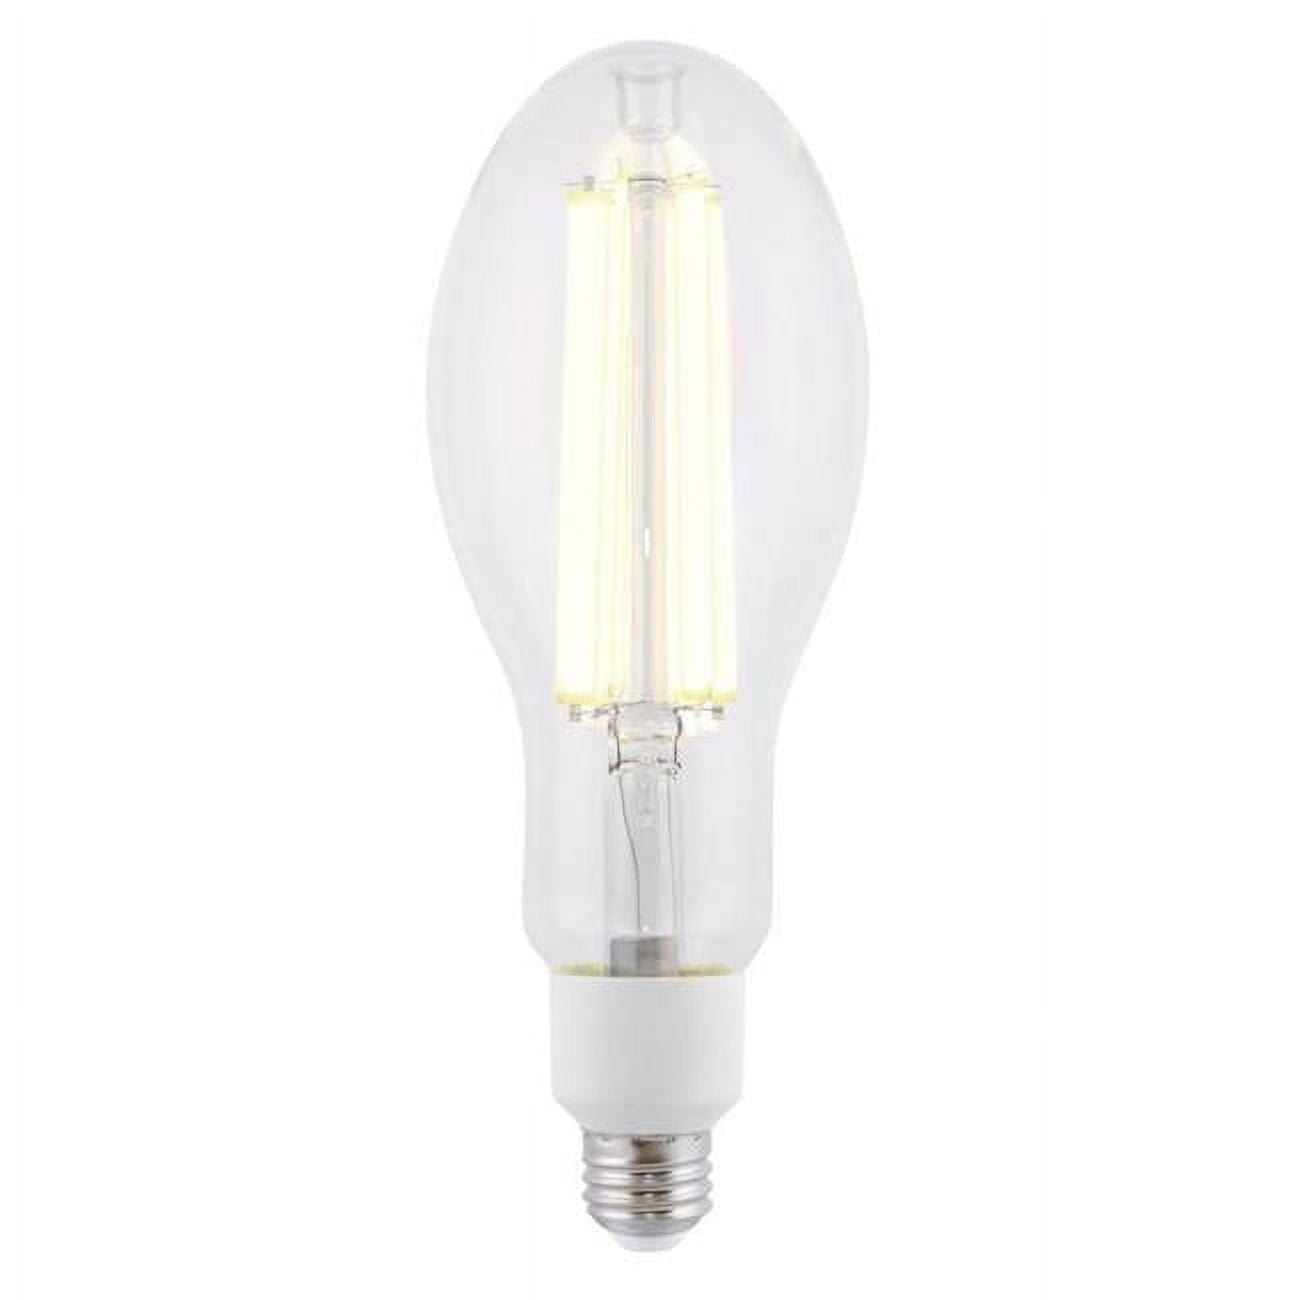 Picture of Westinghouse 3012193 ED28 E26 Medium Filament LED Bulb Daylight - 400W Equivalence